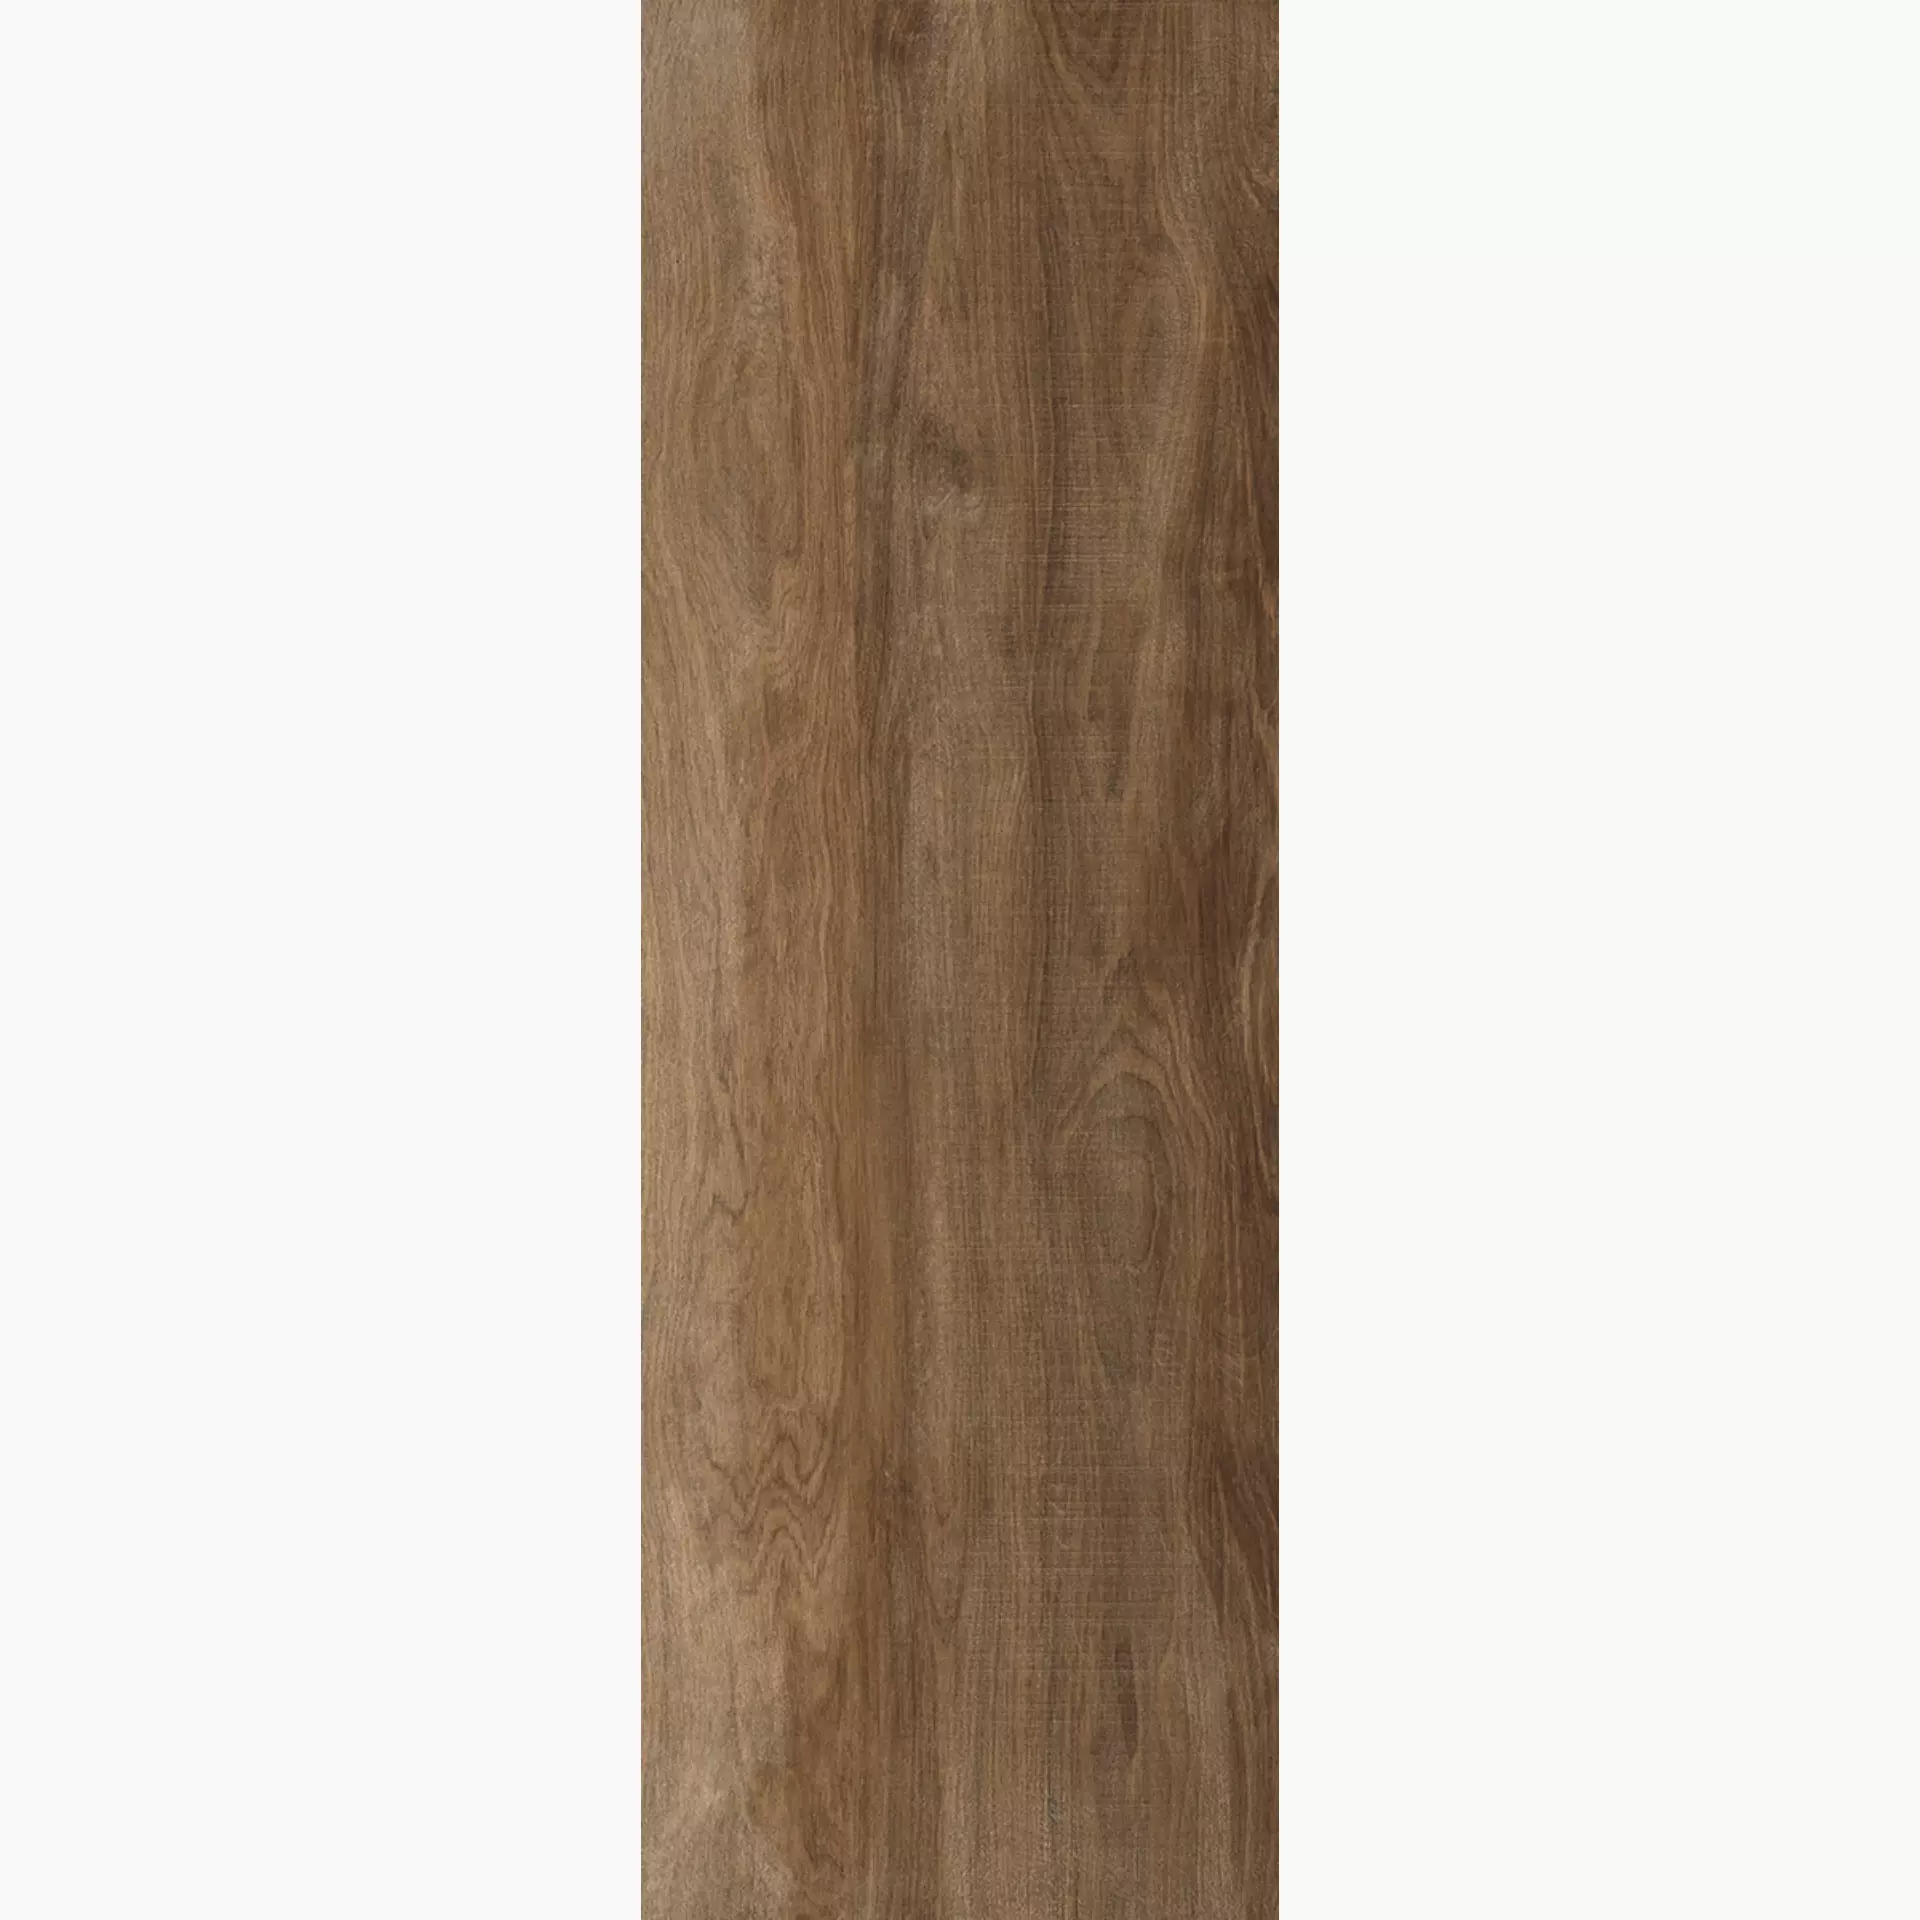 Rondine Greenwood Bruno Grip J87065 40x120cm 20mm